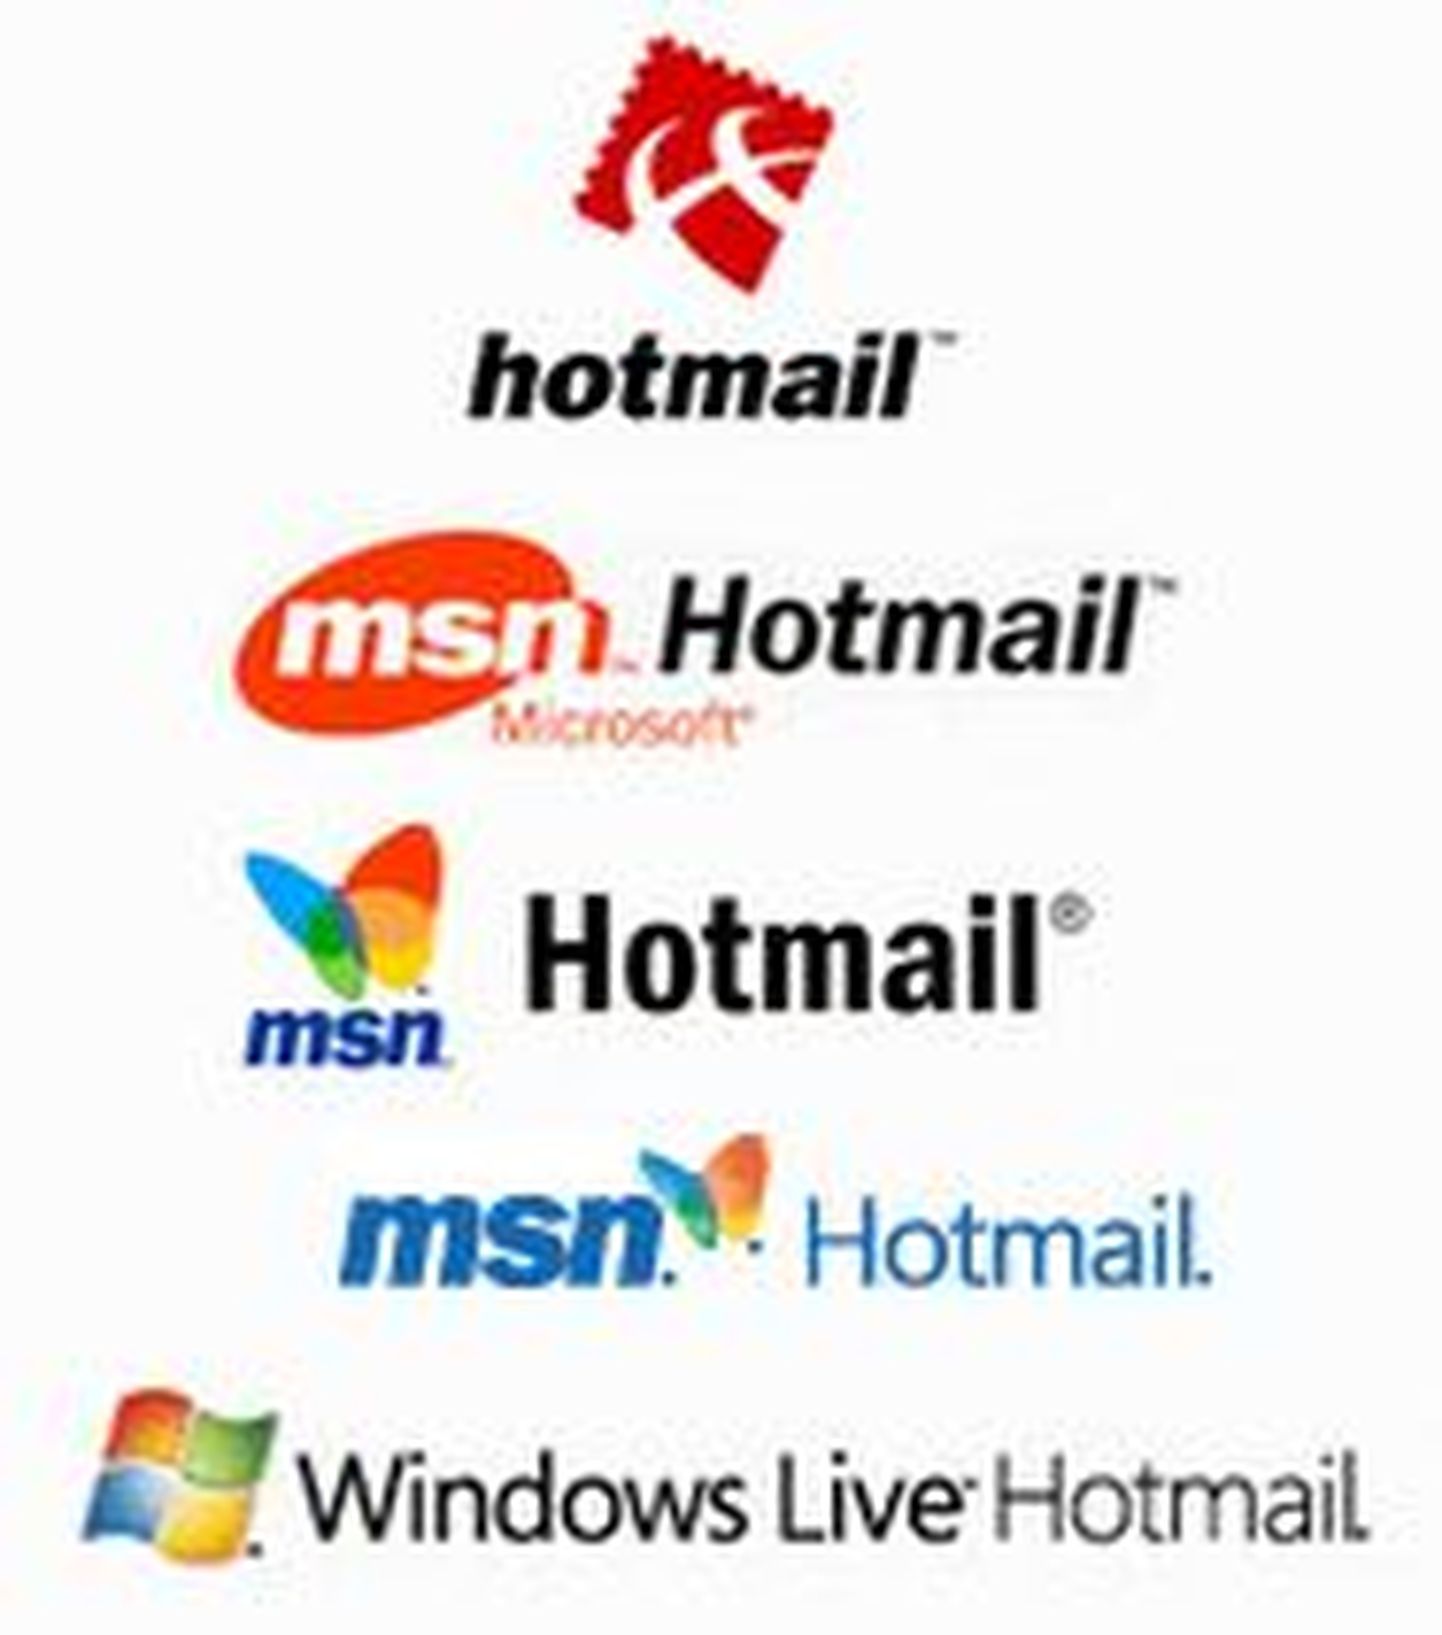 Hotmaili logo muutumine aja jooksul.